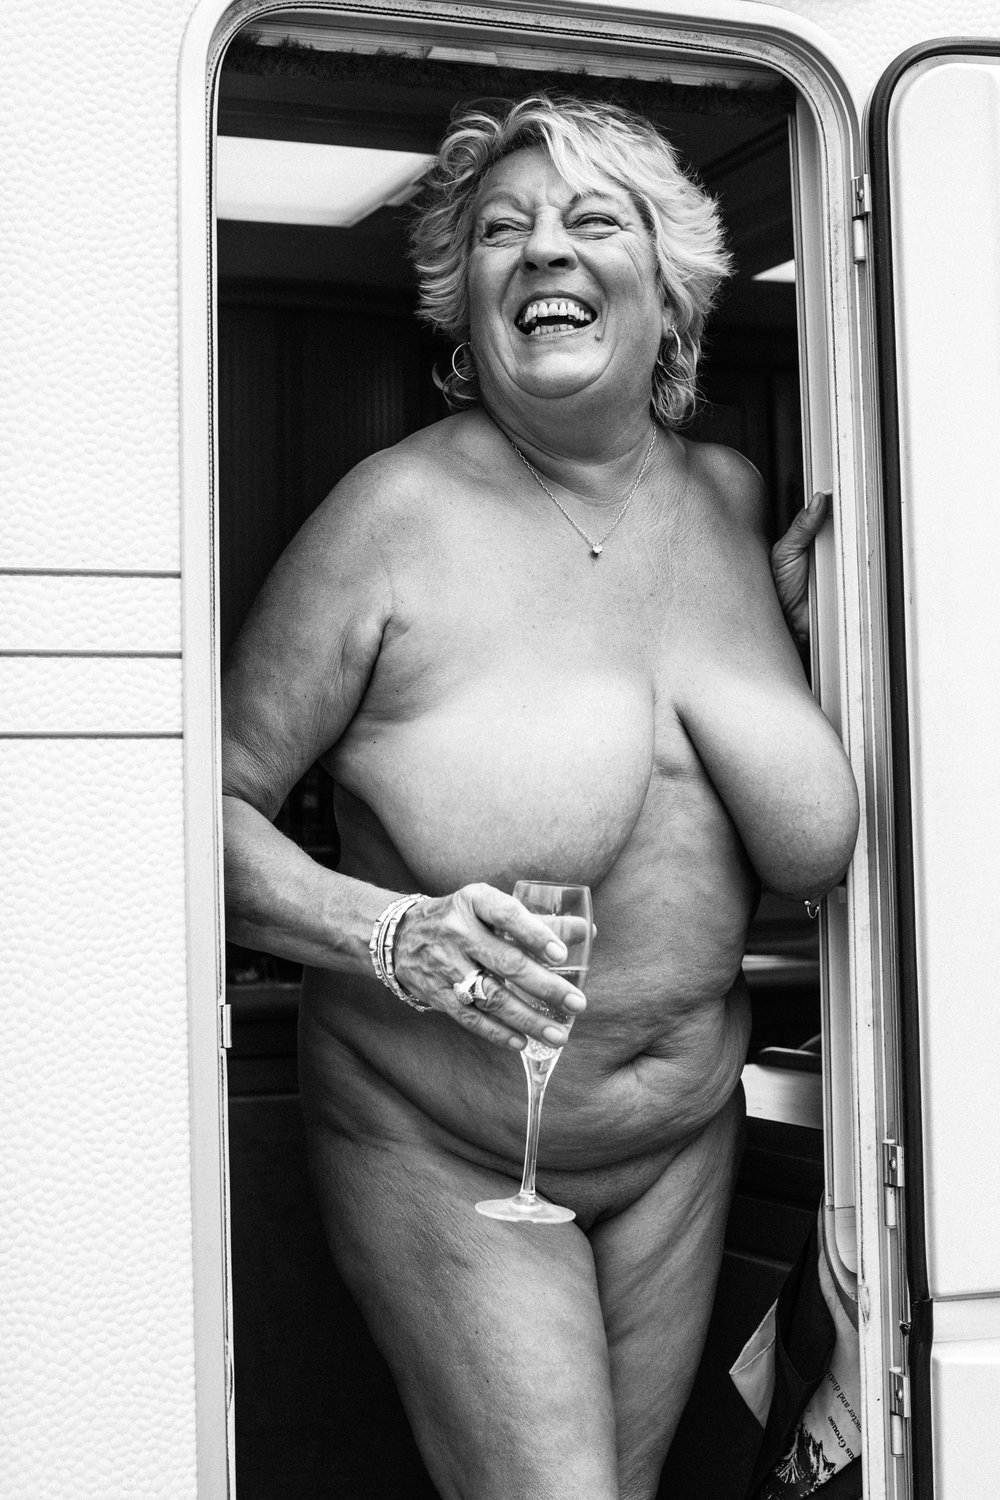 Resultado de imagen para british naturism magazine 219, nude